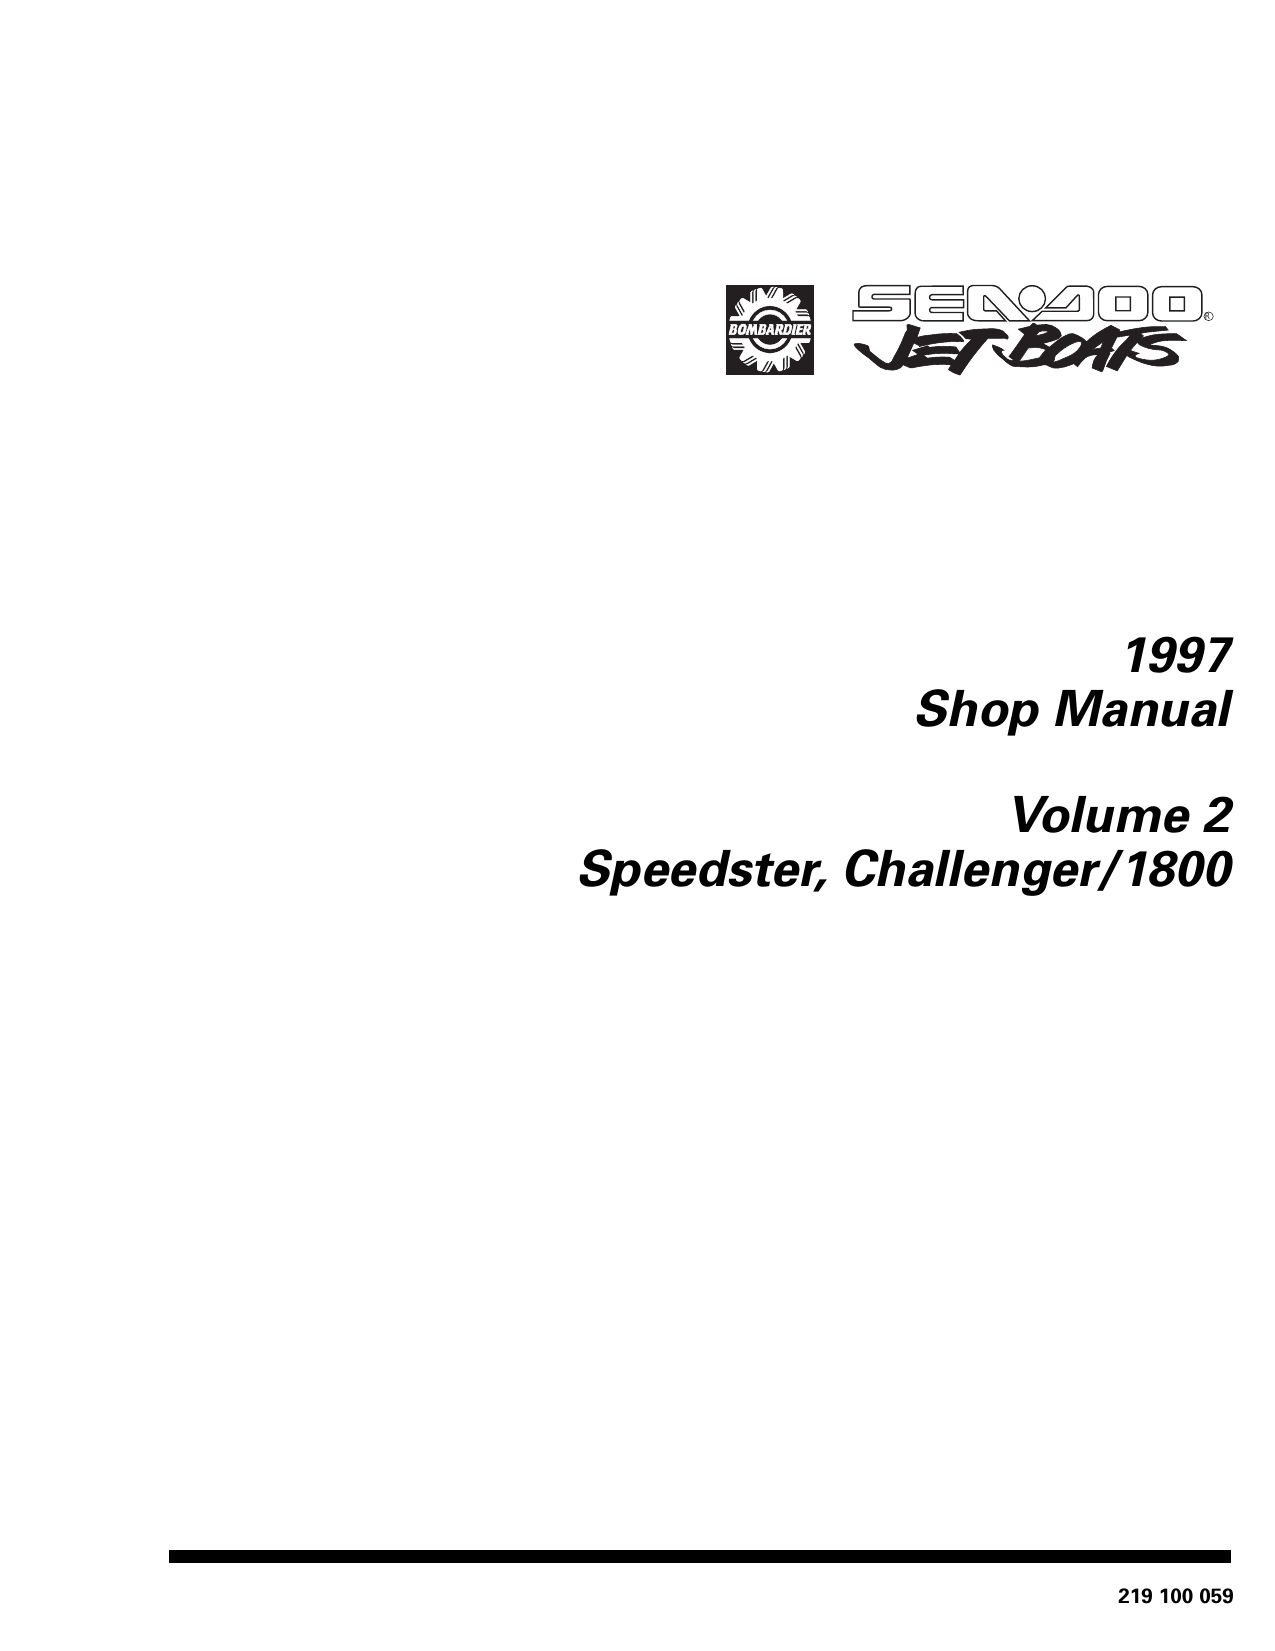 1997 Bombardier Sea-Doo Speedster, Challenger, Challenger 1800 Jet Boat shop manual Preview image 2